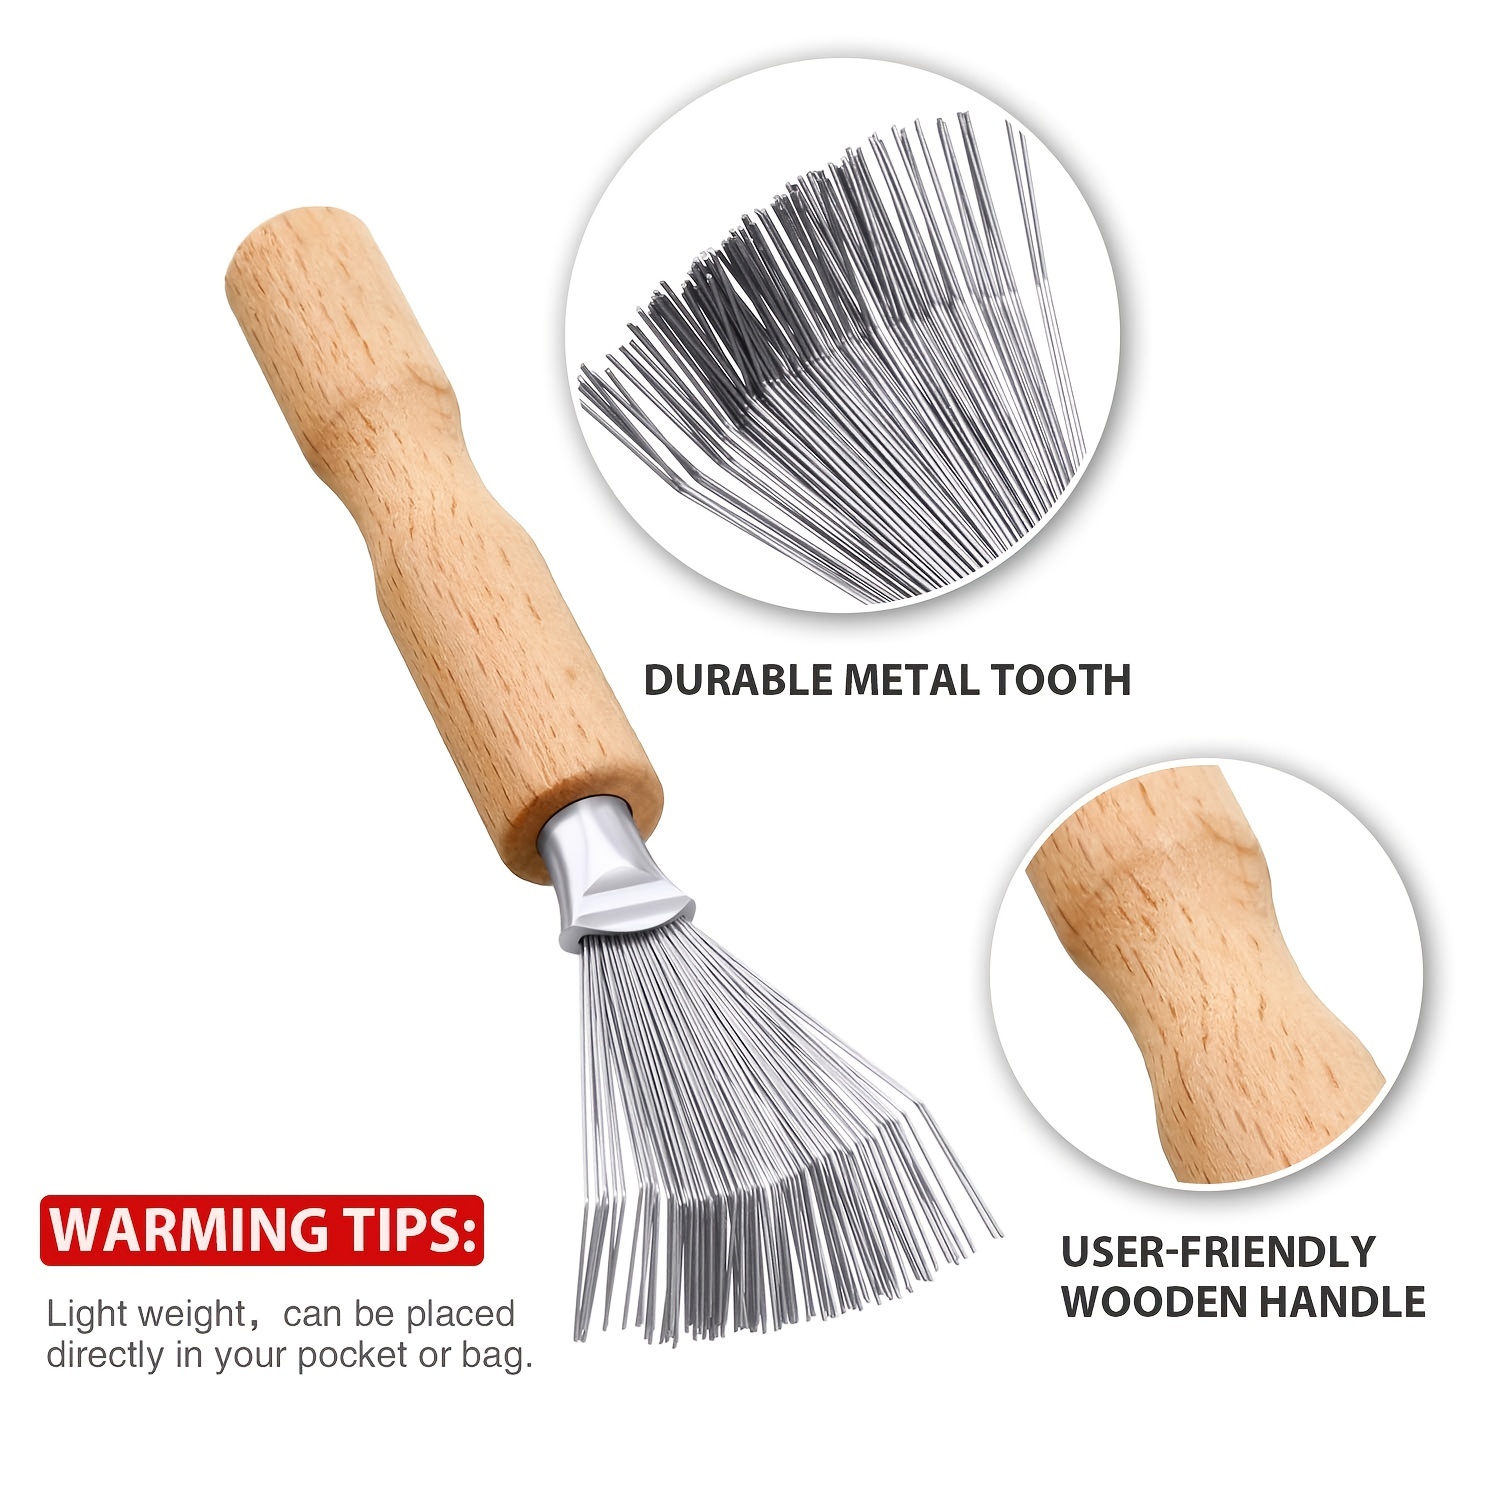 Salon tools: Brush Cleaner